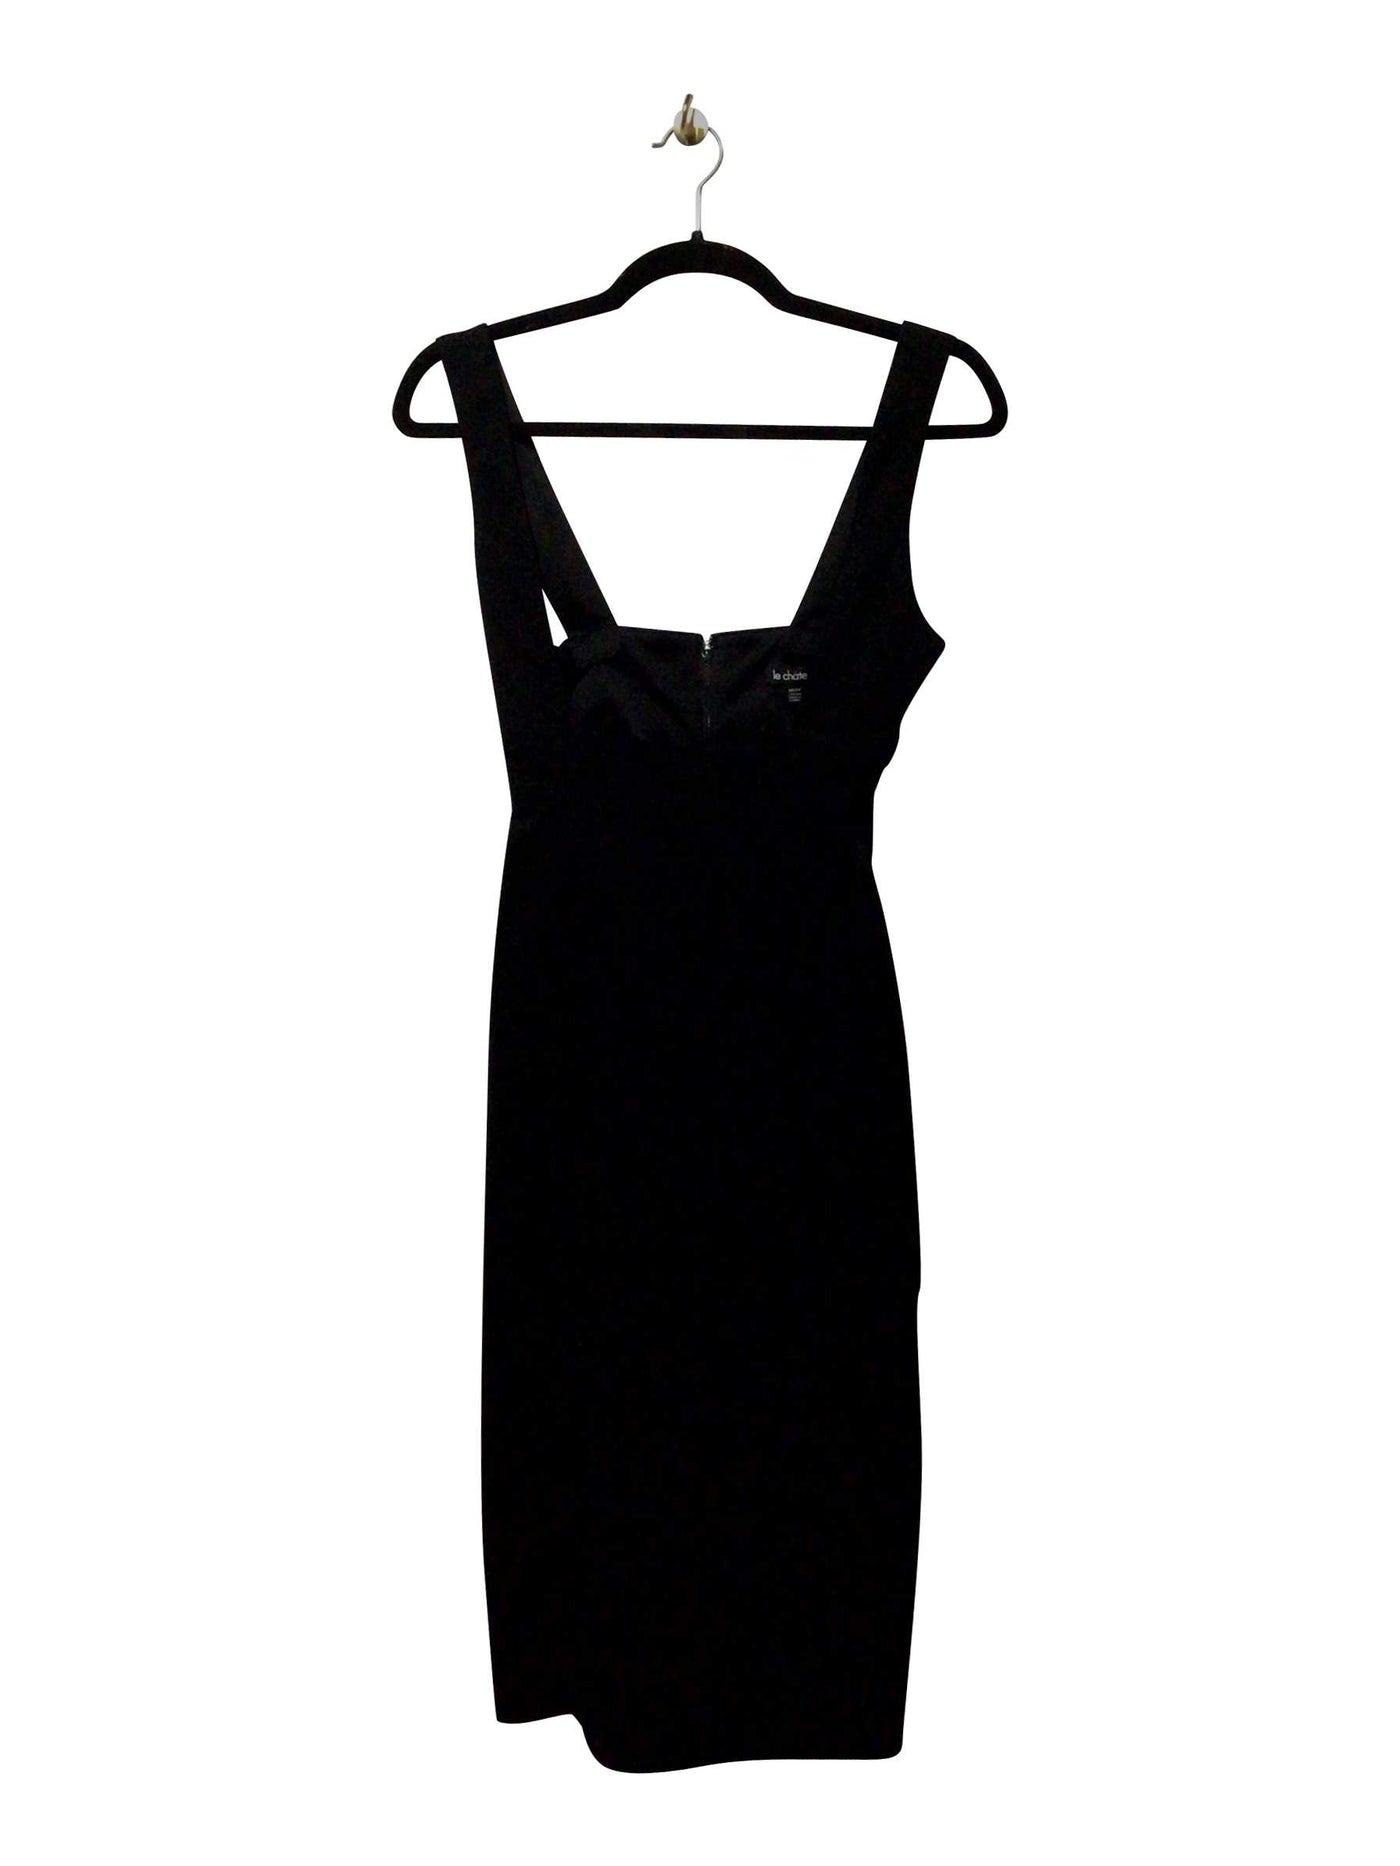 CHATEAU Regular fit Bodycon Dress in Black  -  XS  15.75 Koop